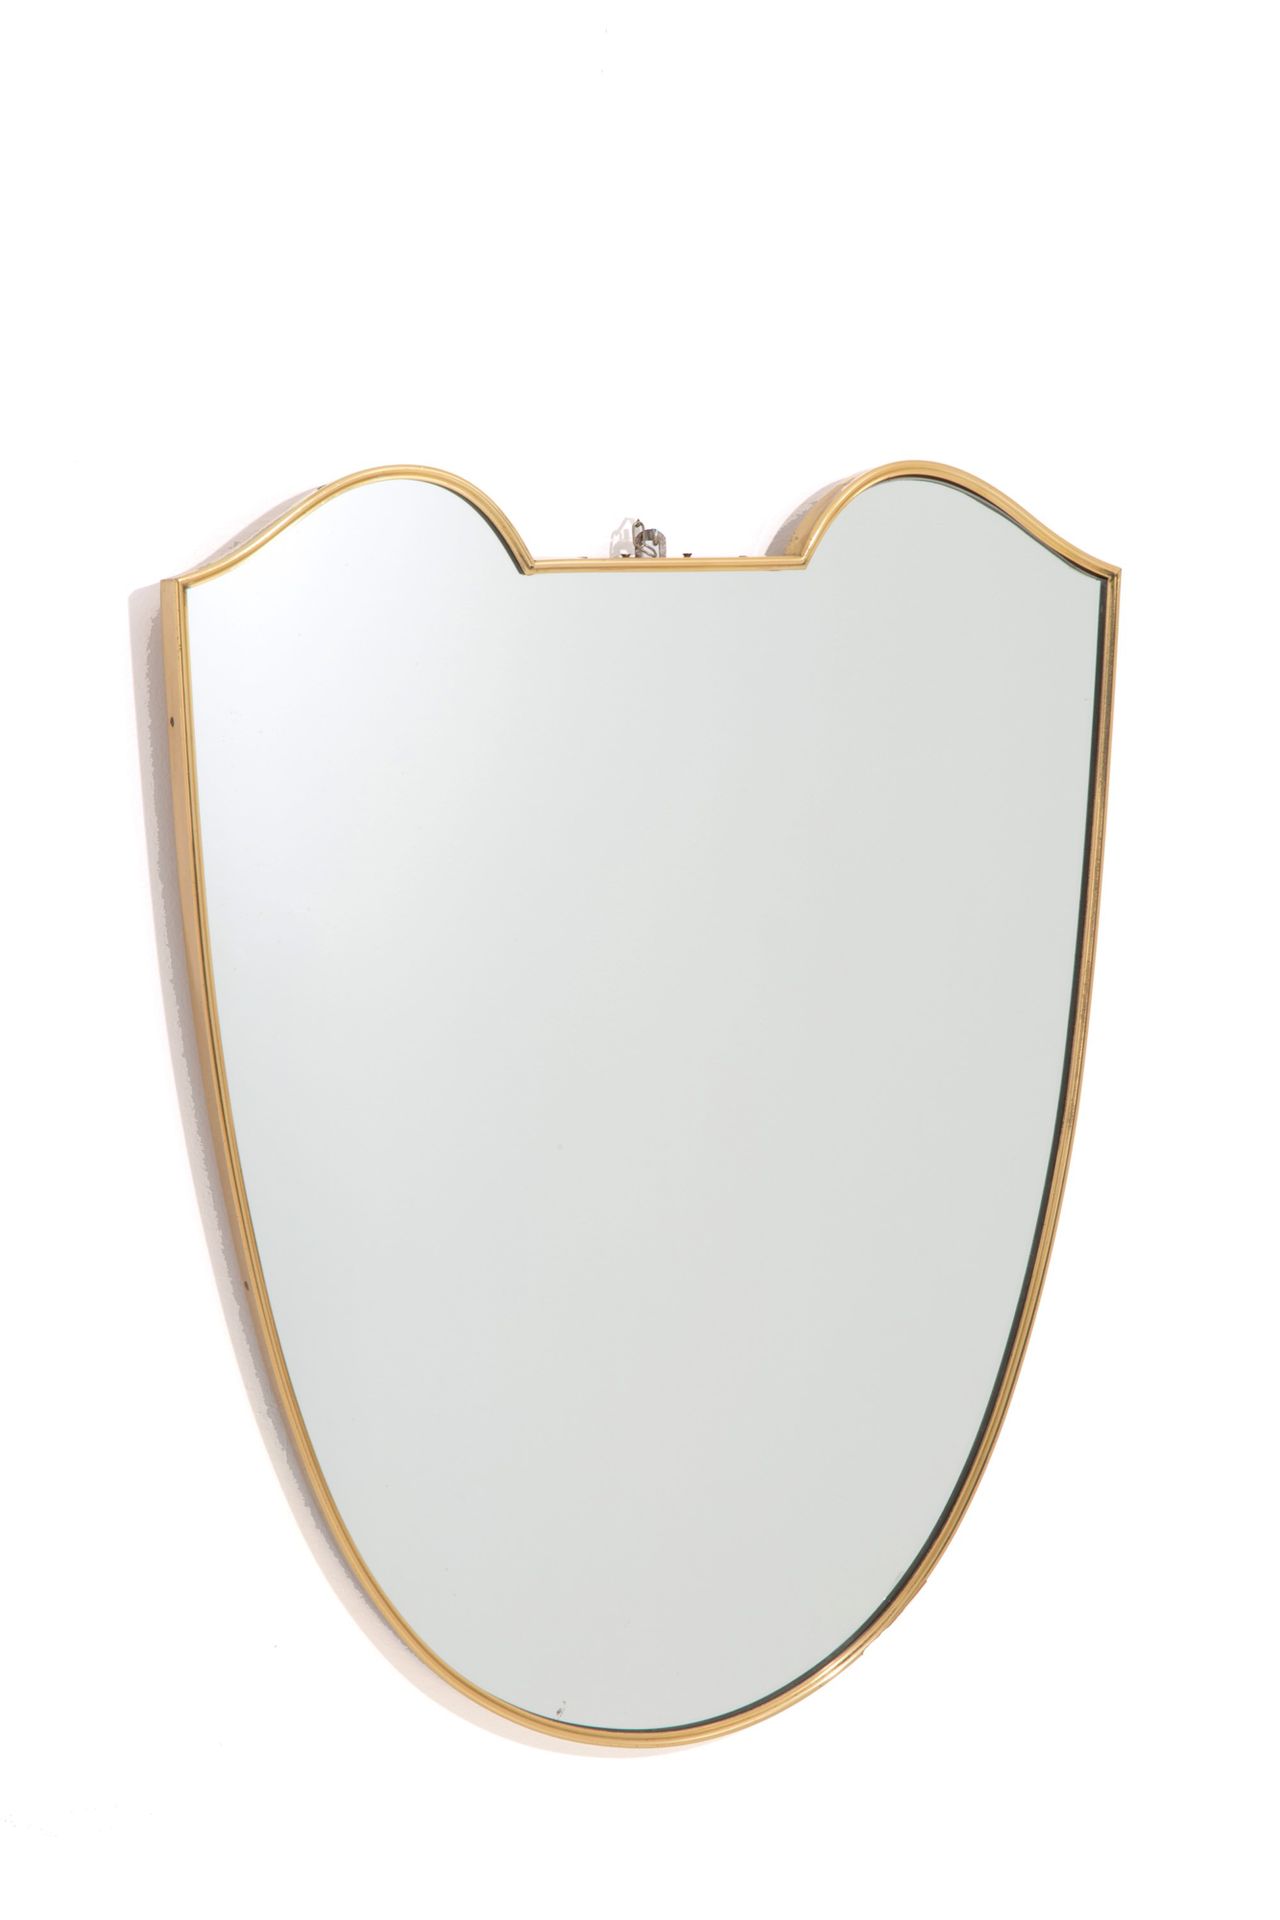 MIRROR Brass shield mirror. 1950s. 72.5x54x2.5 cm approx.